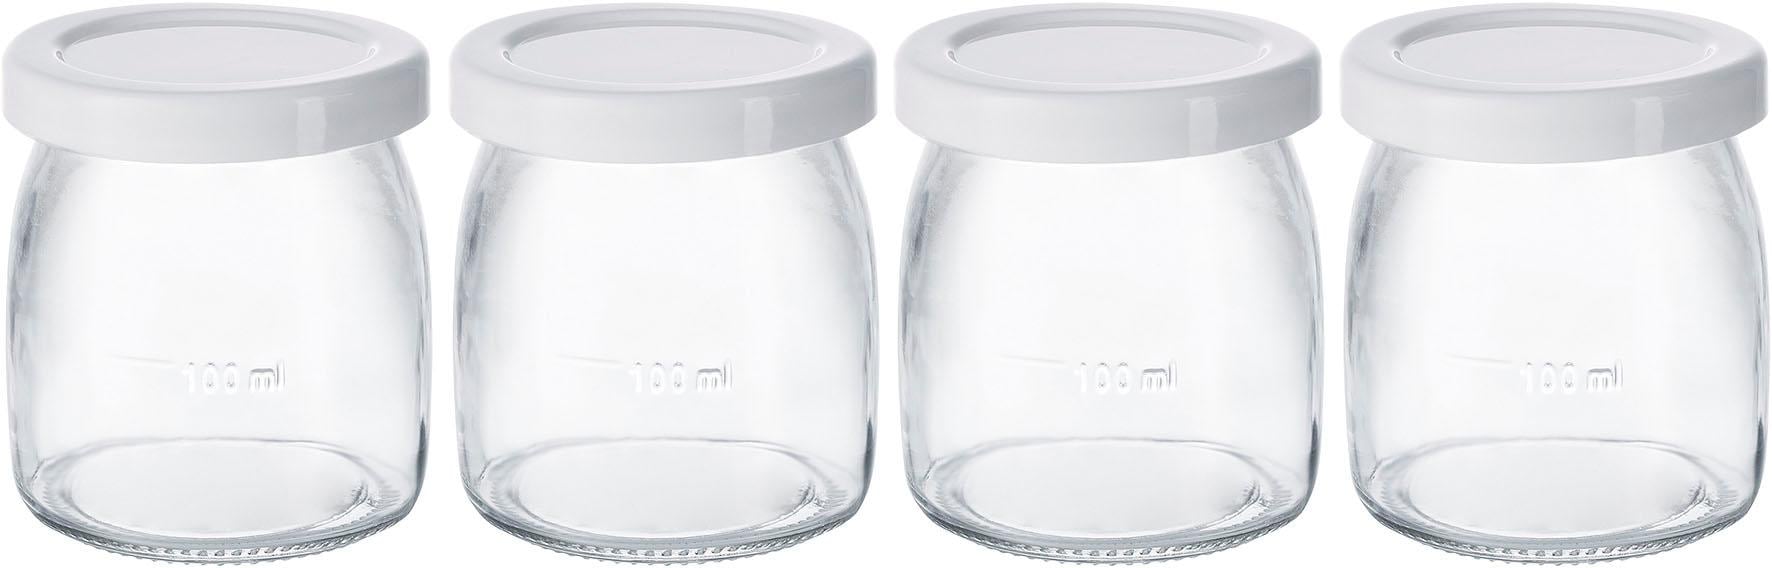 Steba Joghurtbereiter »JM 3«, 8 Portionsbehälter, je 180 ml